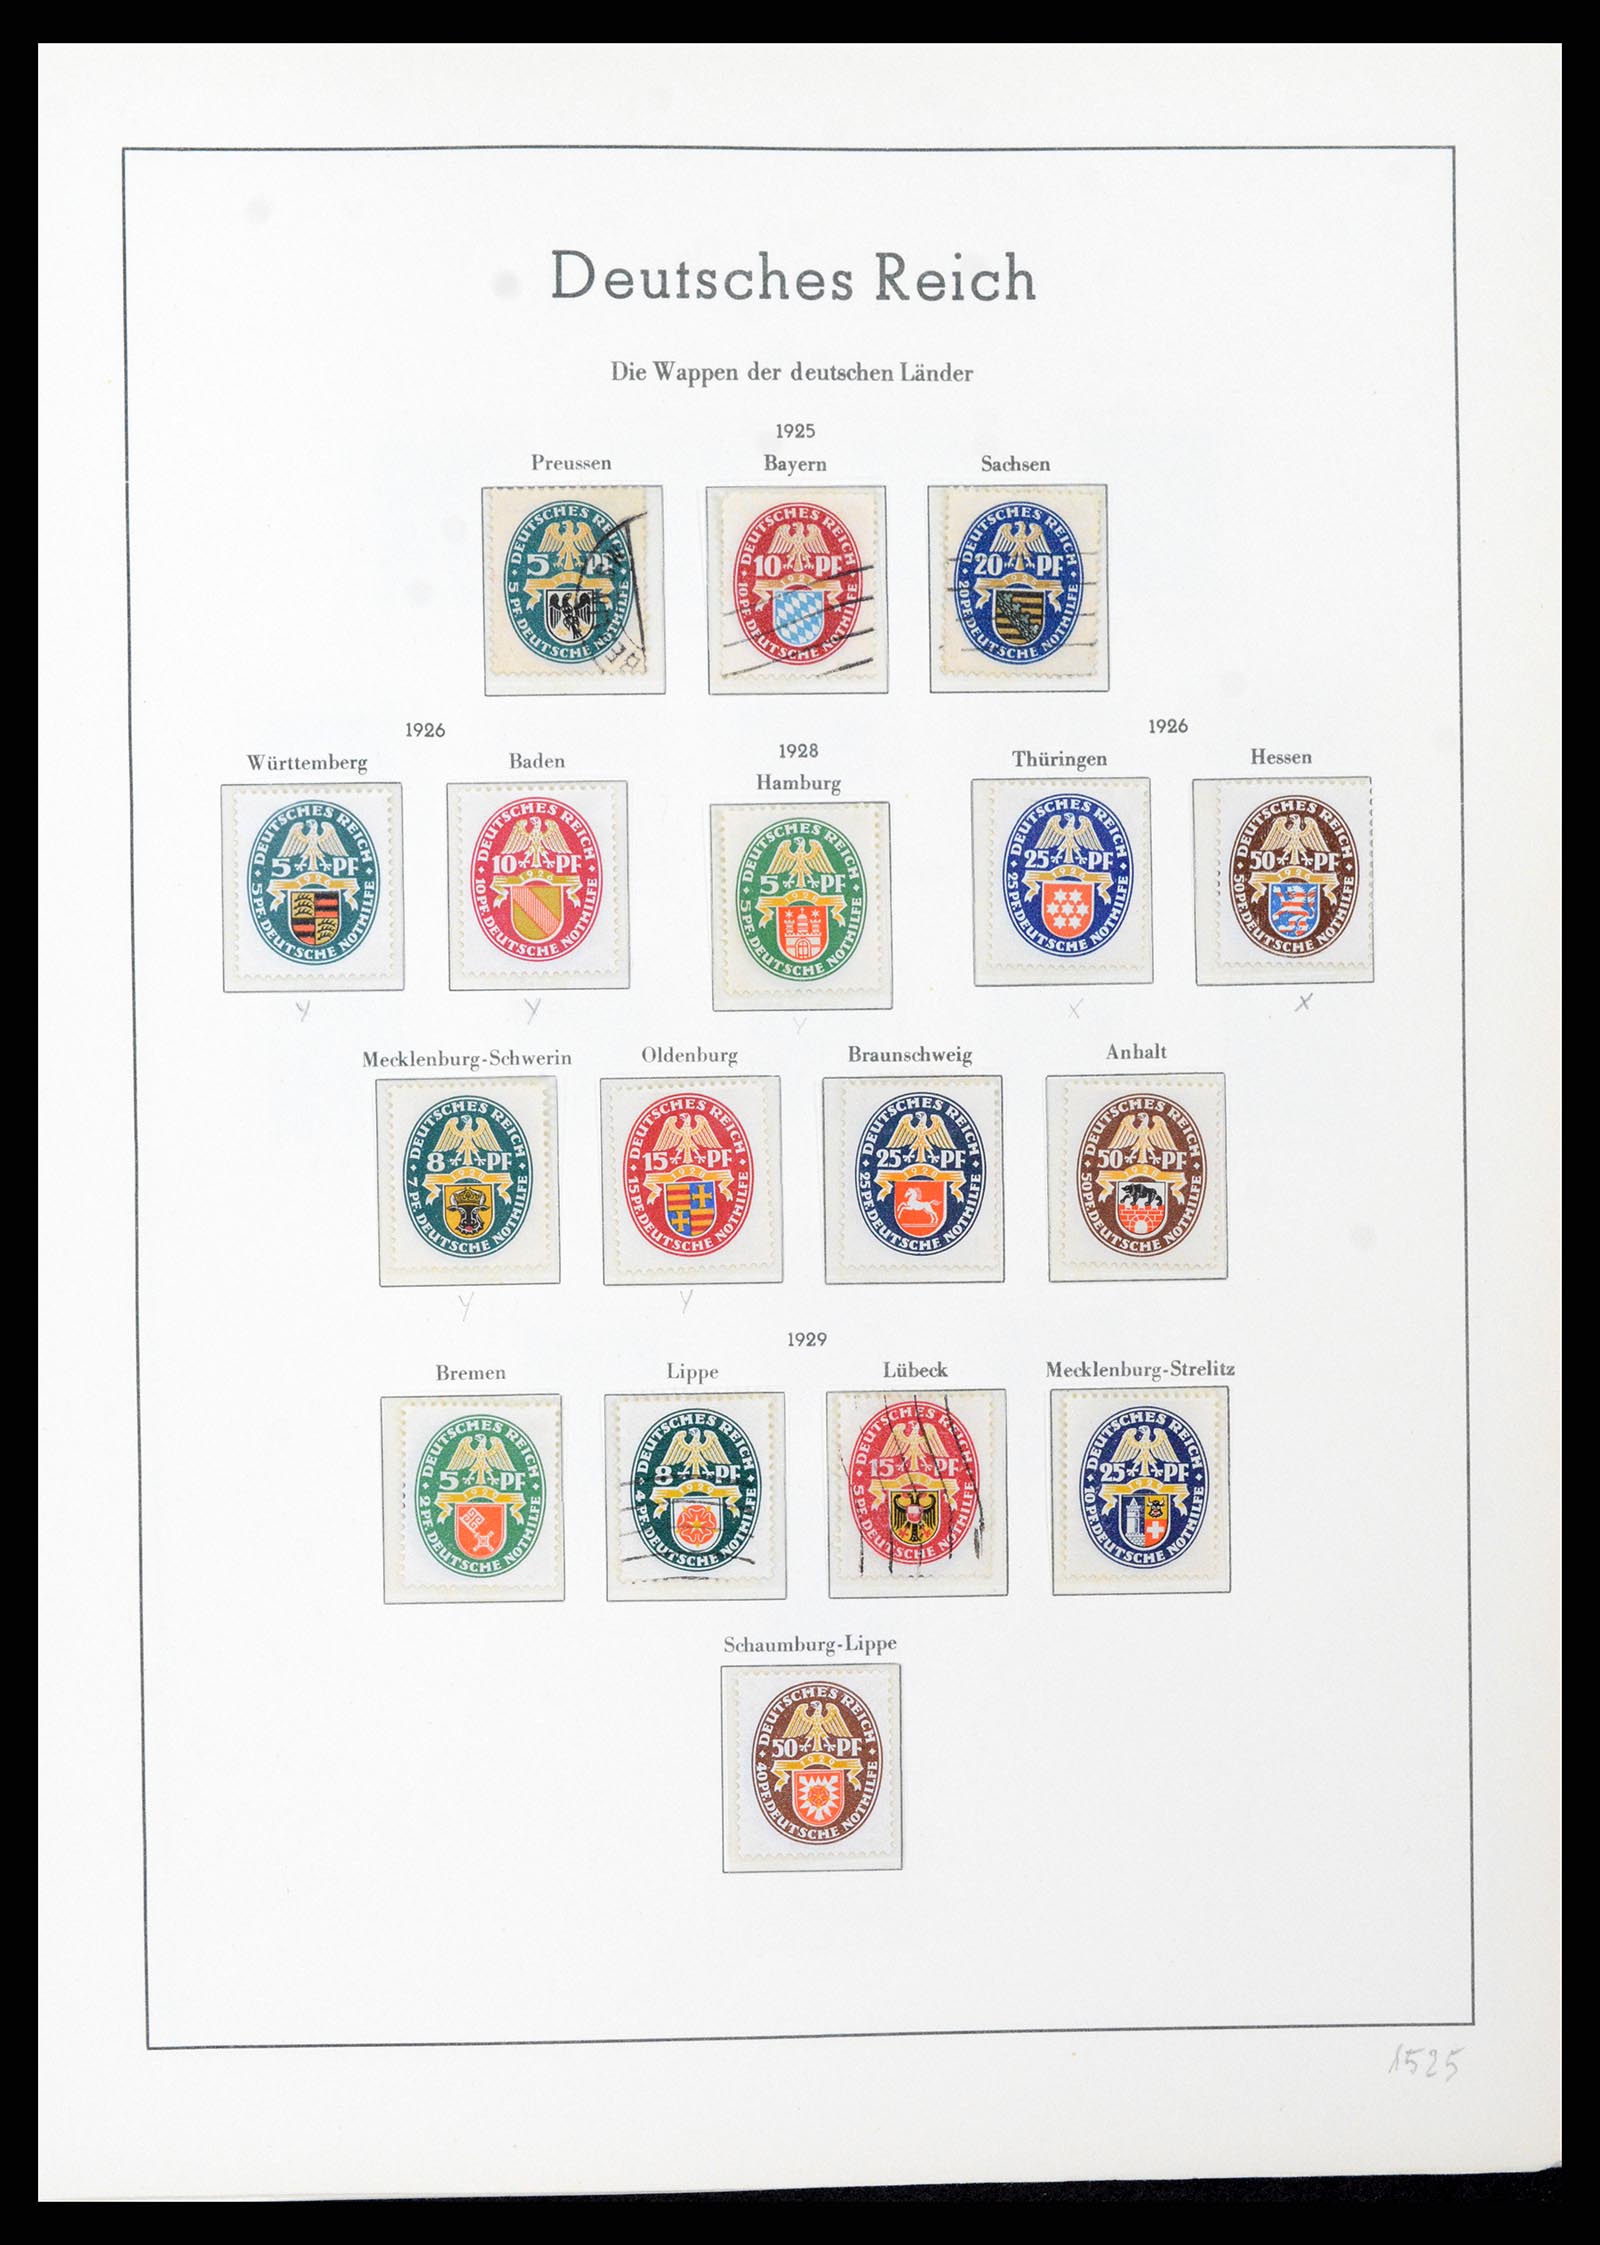 37589 038 - Stamp collection 37589 German Reich 1872-1945.